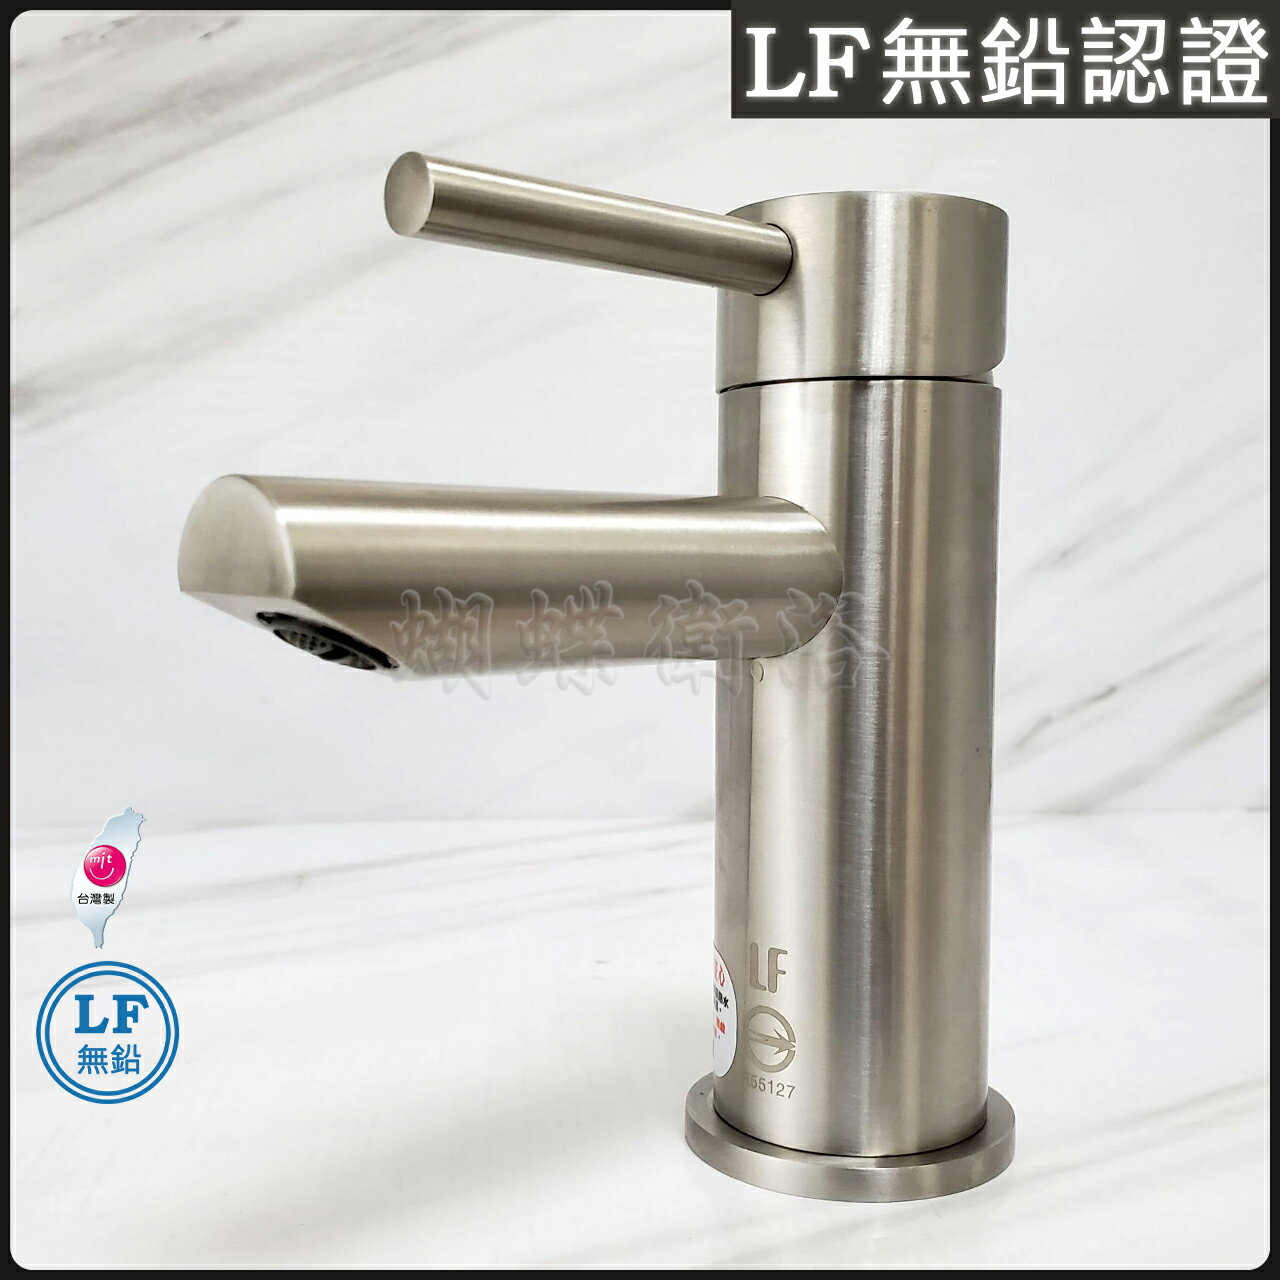 【LF無鉛認證】HK-3027不鏽鋼單孔面盆龍頭.MIT台灣製造.通過CNS8088認證.冷熱混合